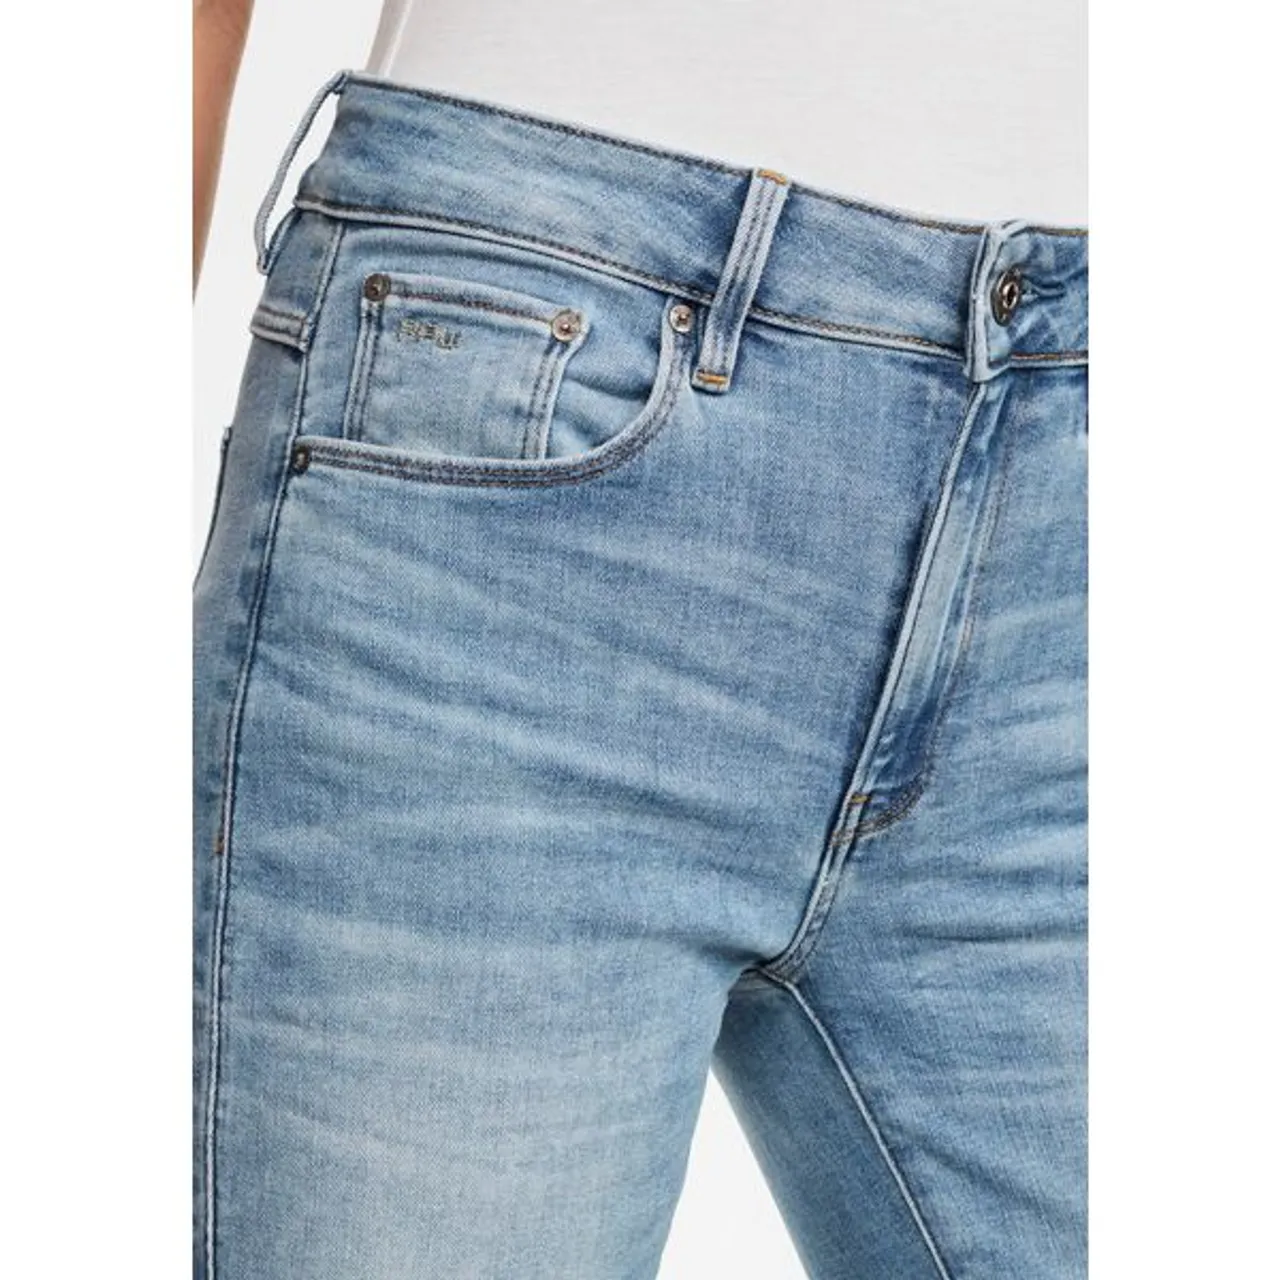 Skinny-fit-Jeans G-STAR RAW "3301 High Skinny" Gr. 32, Länge 32, blau (light indigo aged (blue used)) Damen Jeans Röhrenjeans